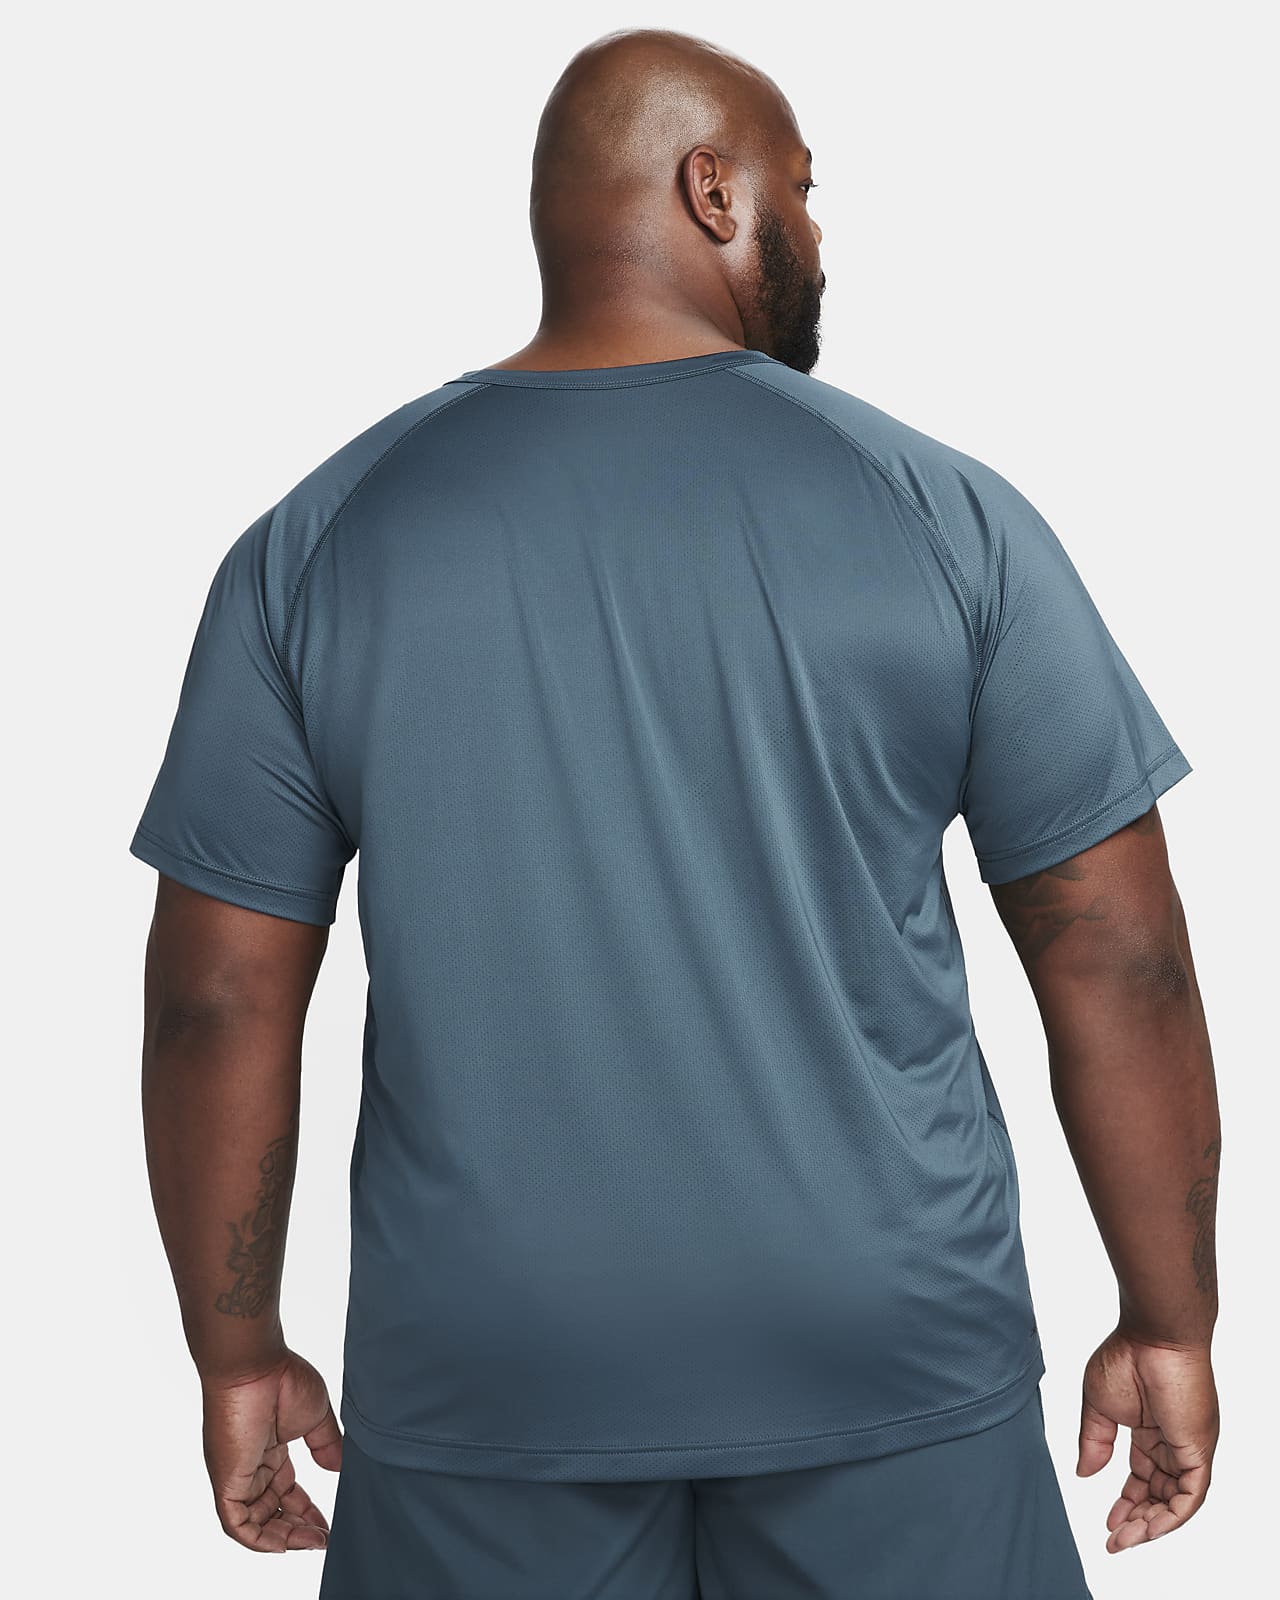 Nike Ready Men's Dri-FIT Short-Sleeve Fitness Top